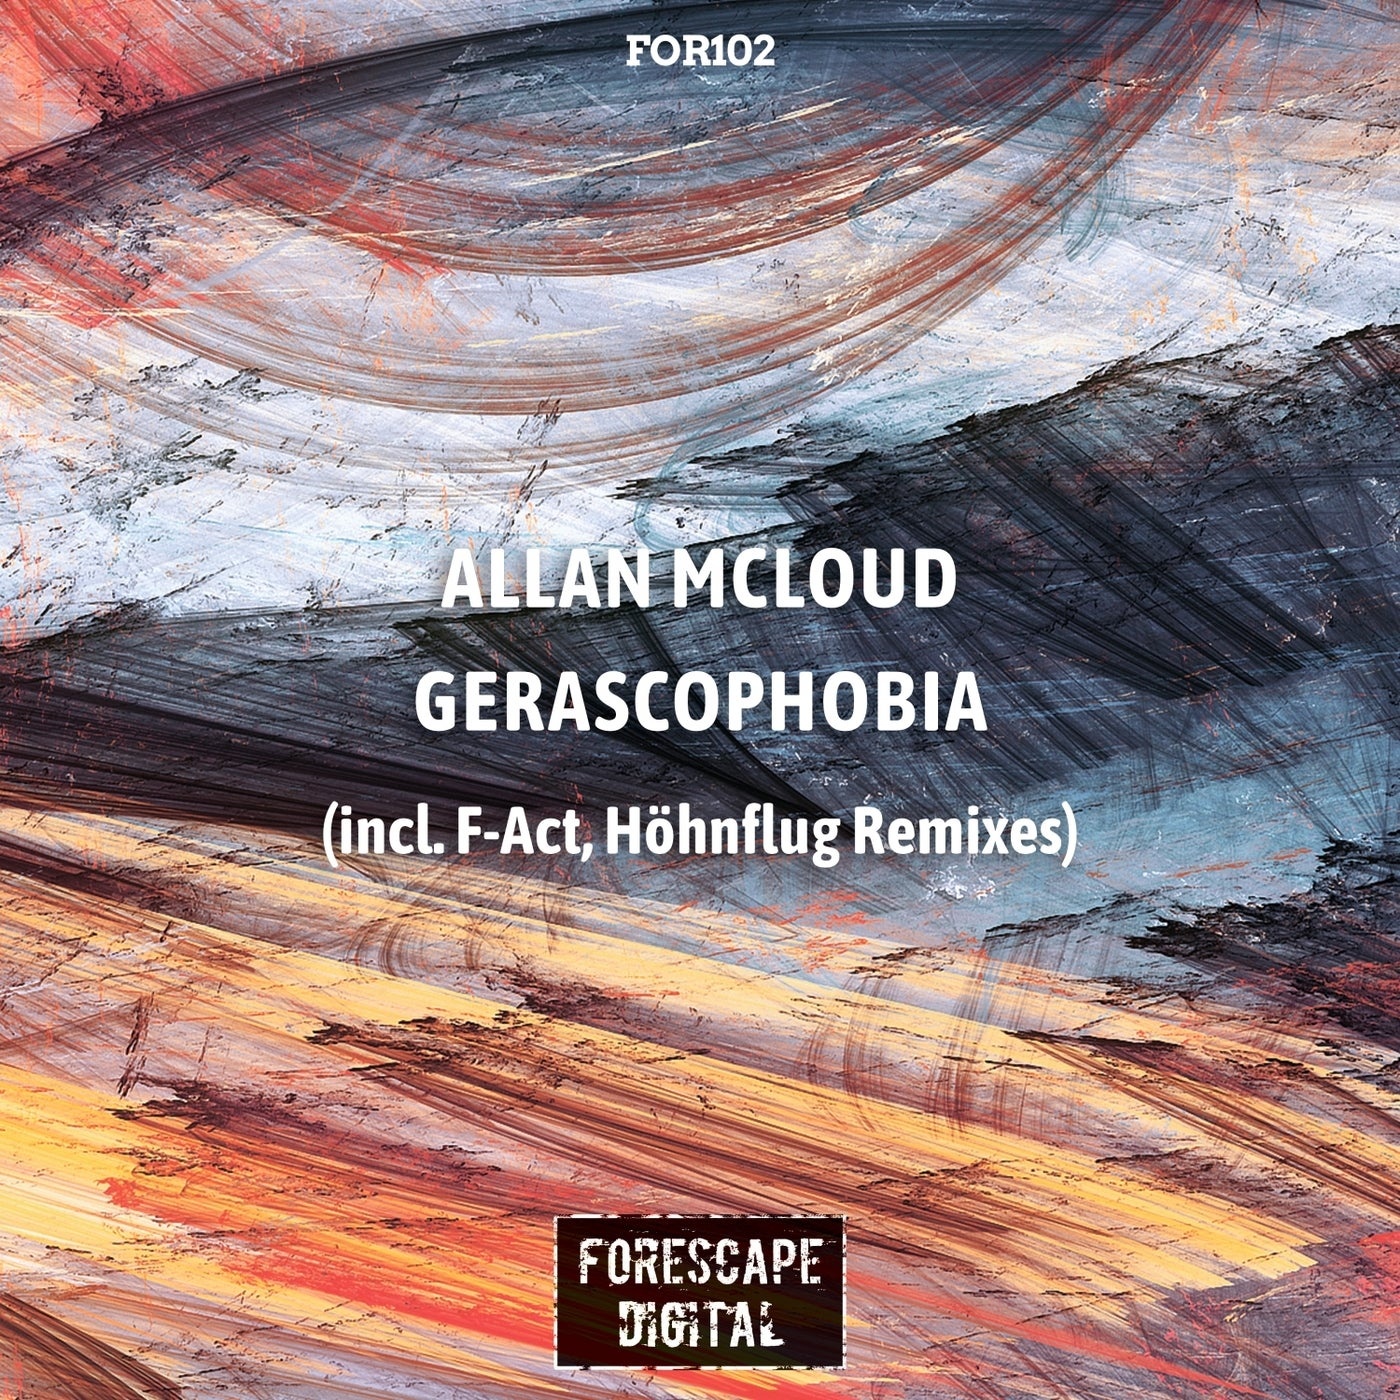 Allan McLoud - Gerascophobia [FOR102]